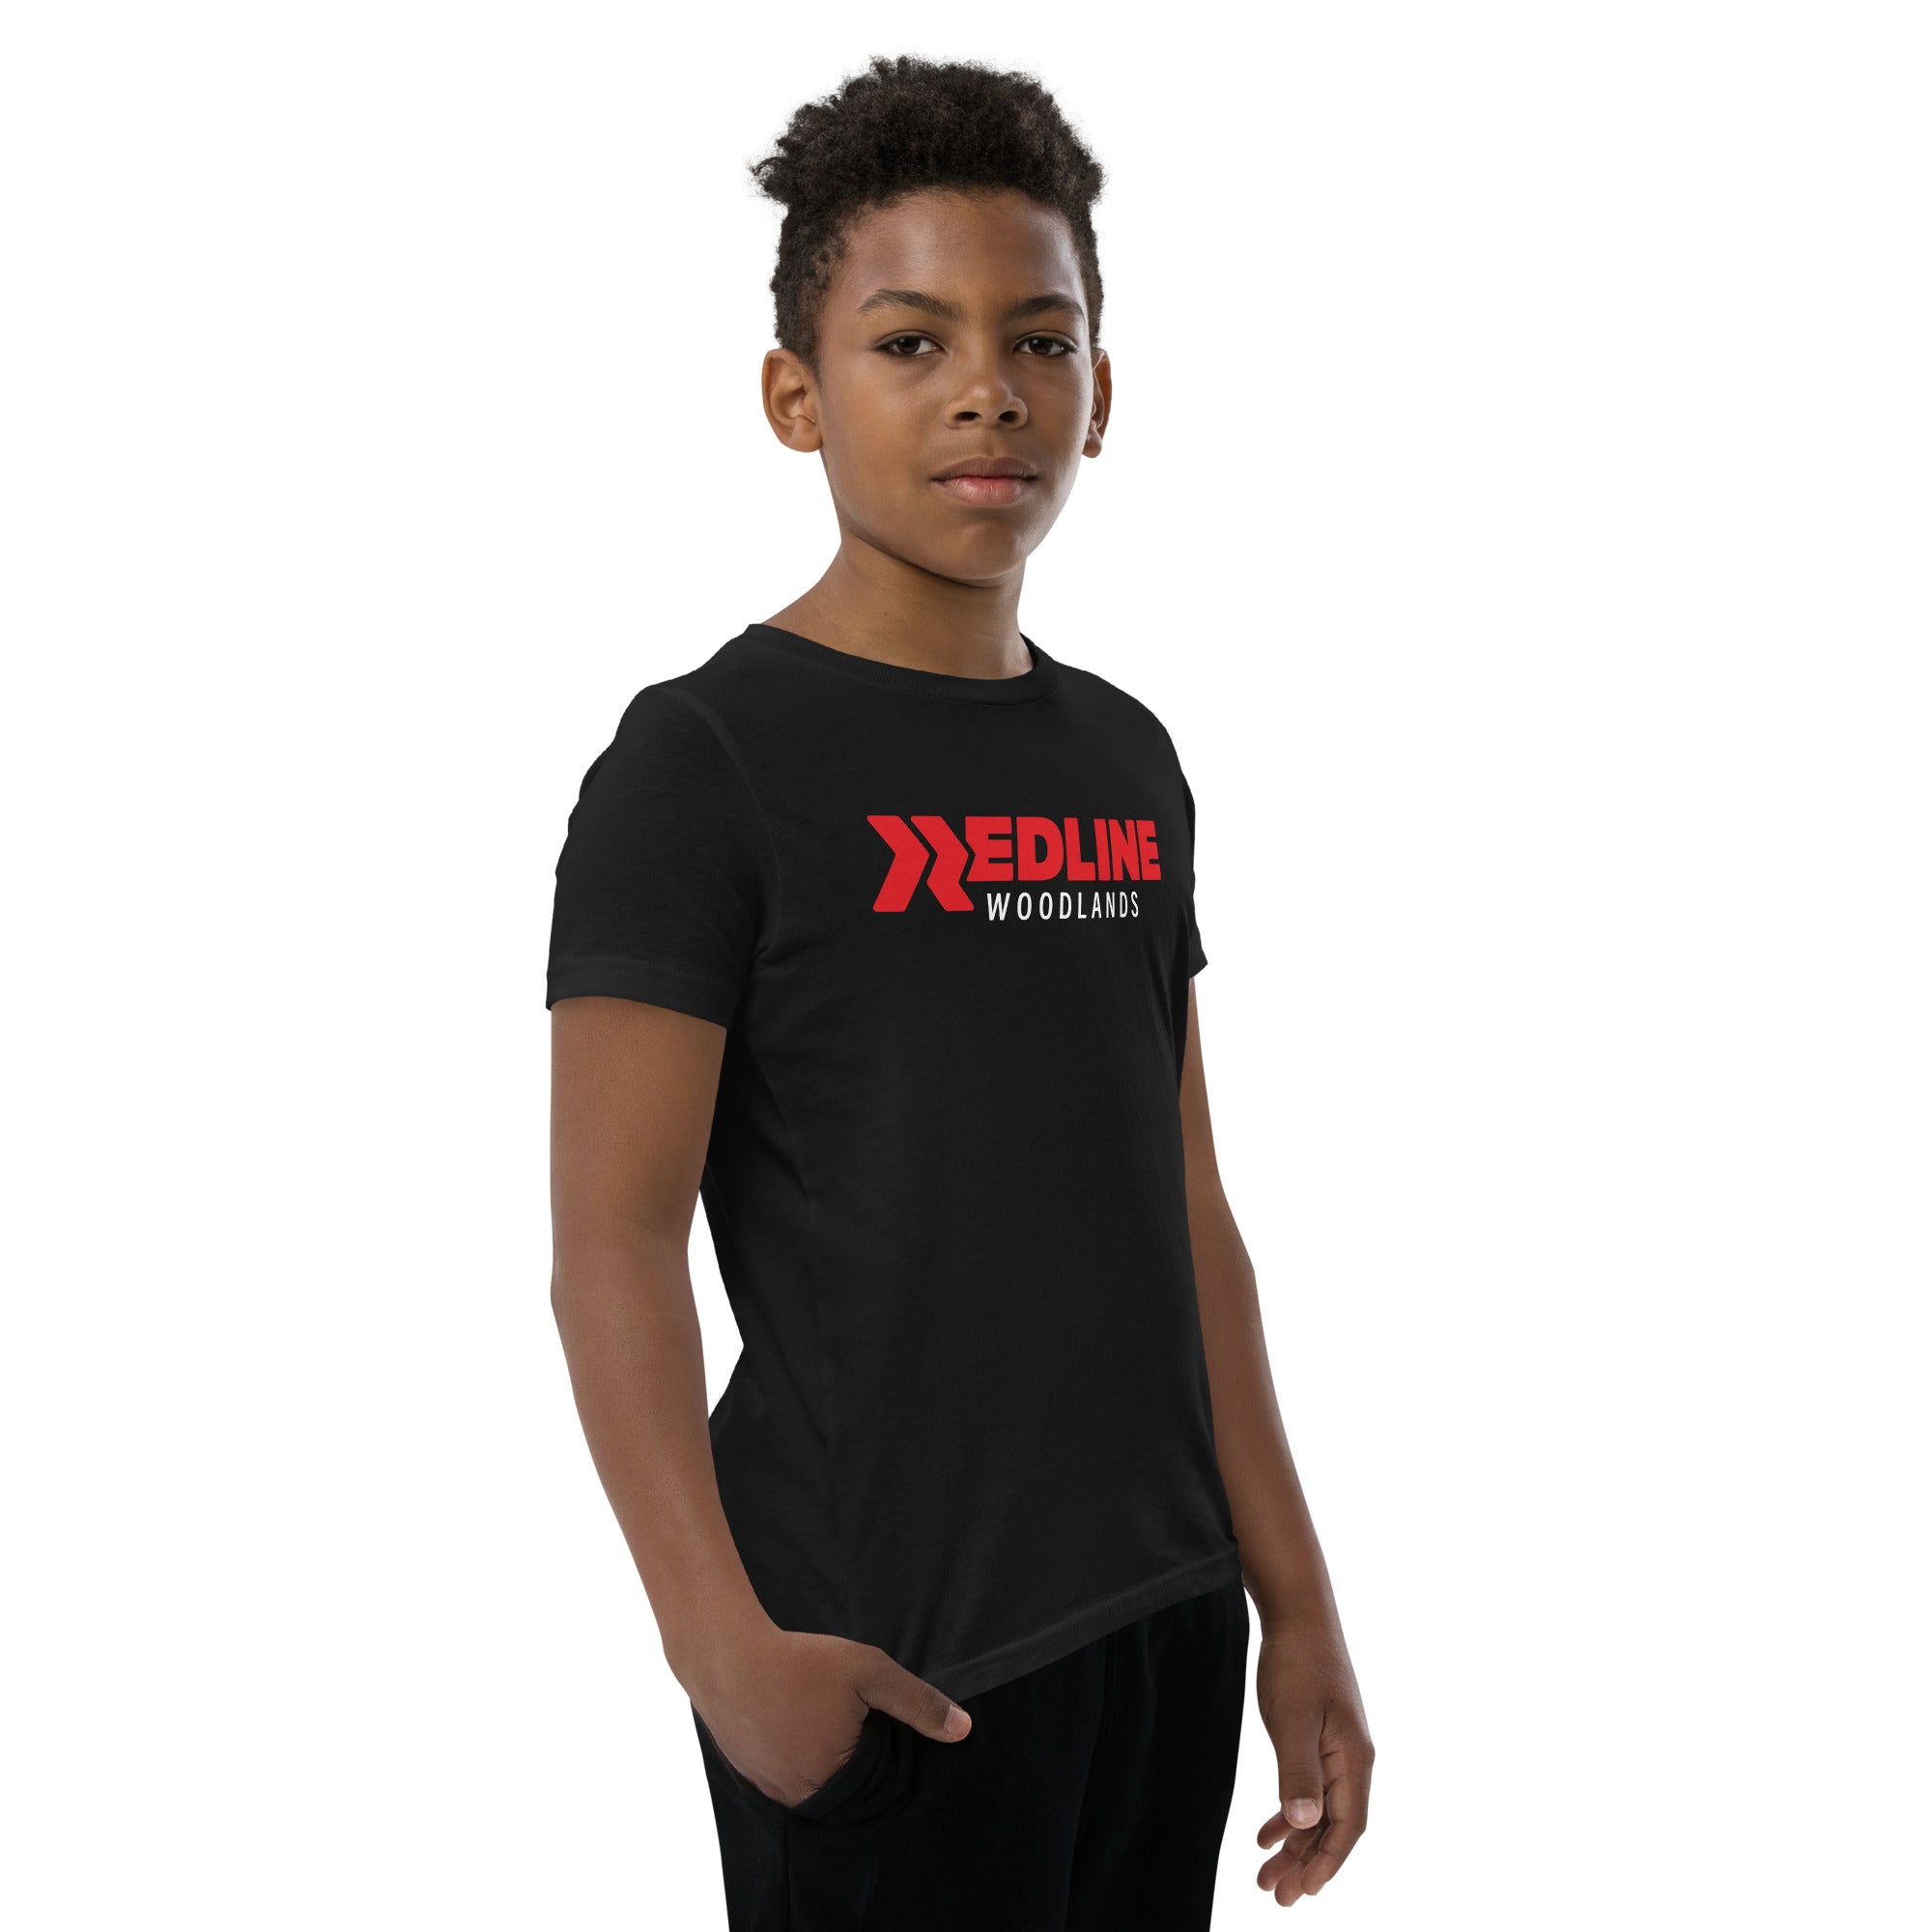 Woodlands Logo R/W - Black Youth Short Sleeve T-Shirt